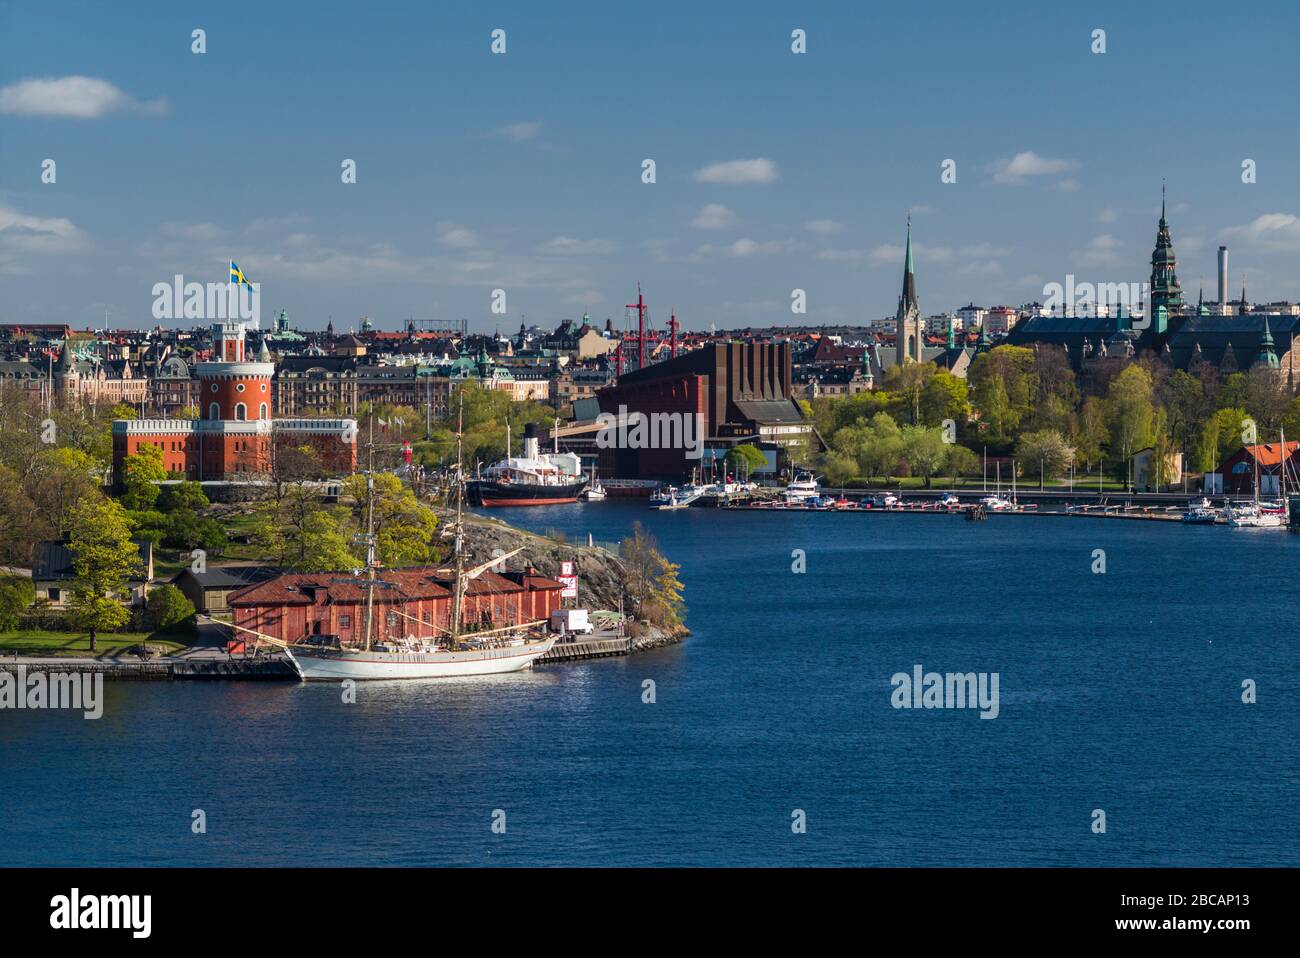 Sweden, Stockholm, Sodermalm neighborhood, view towards the Vasamuseet Vasa ship museum and Stockhom harbor Stock Photo